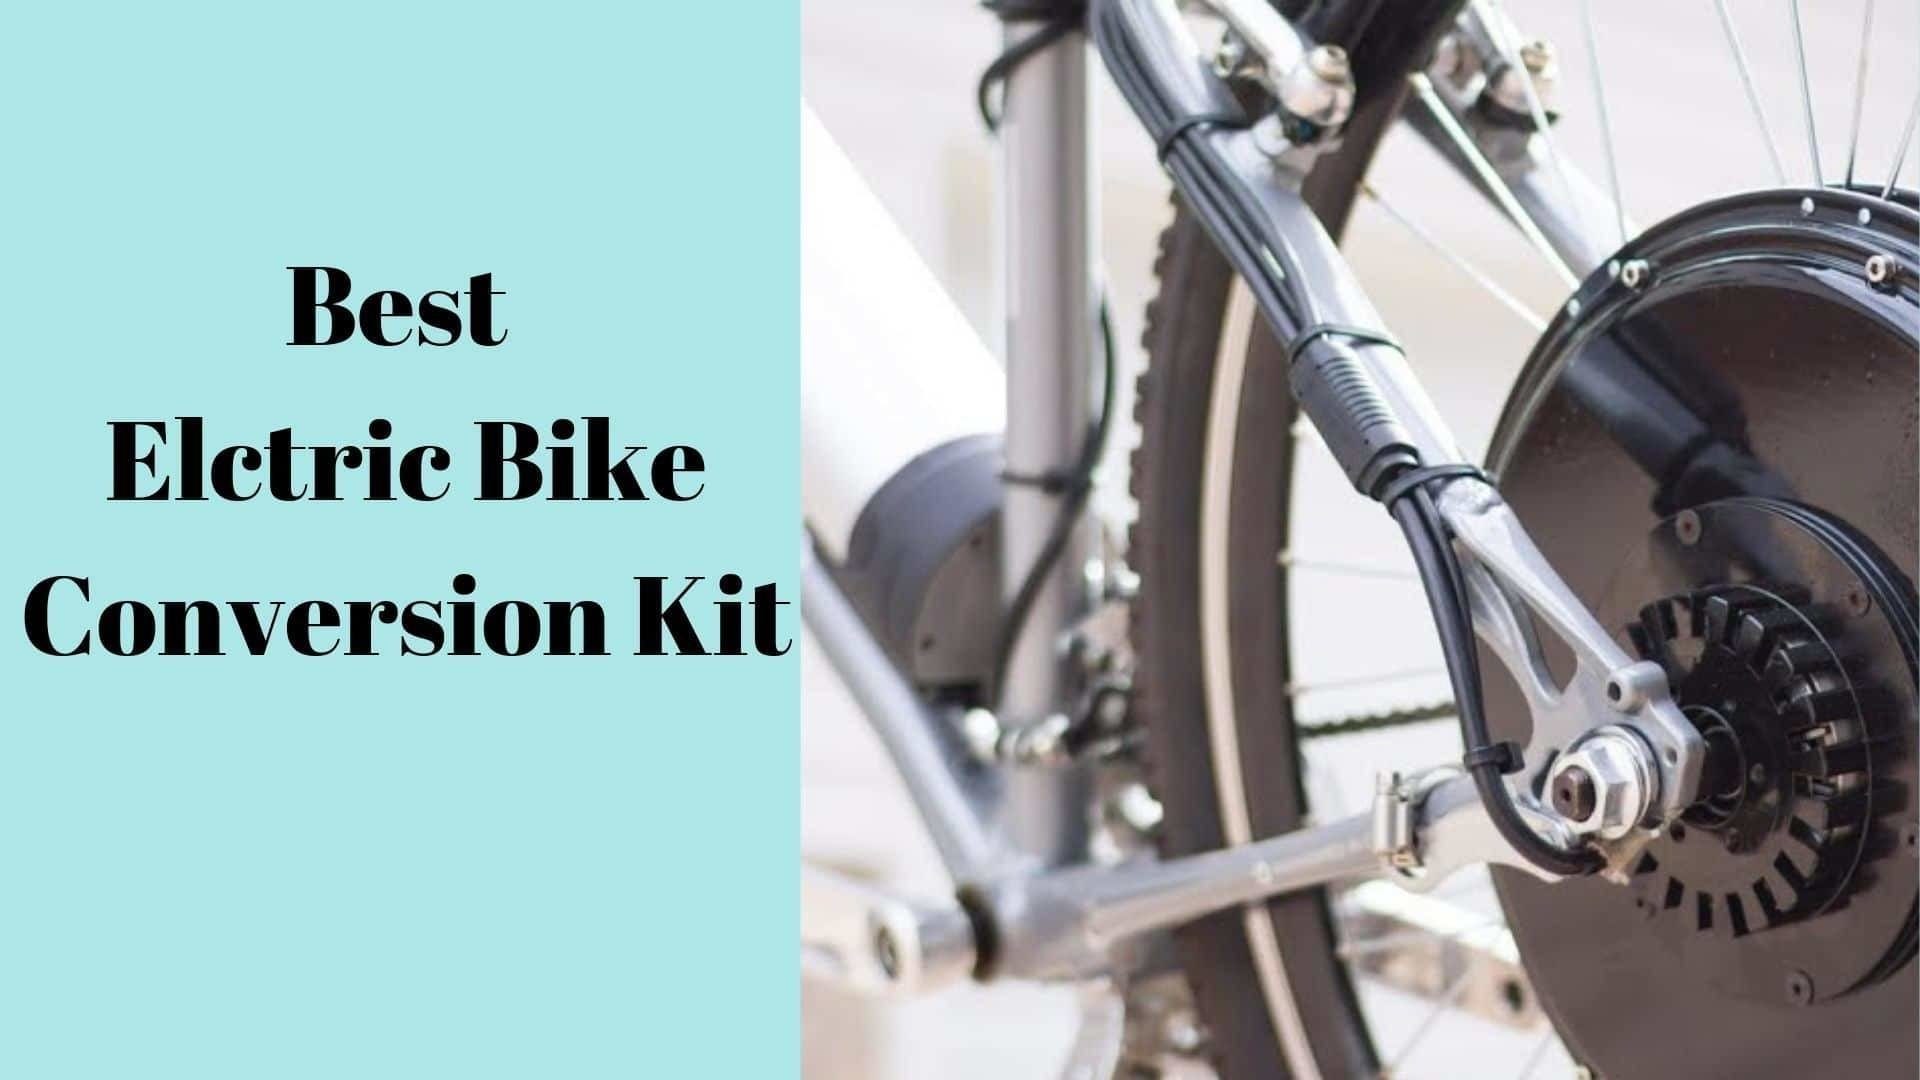 Best Electric Bike Conversion Kit in 